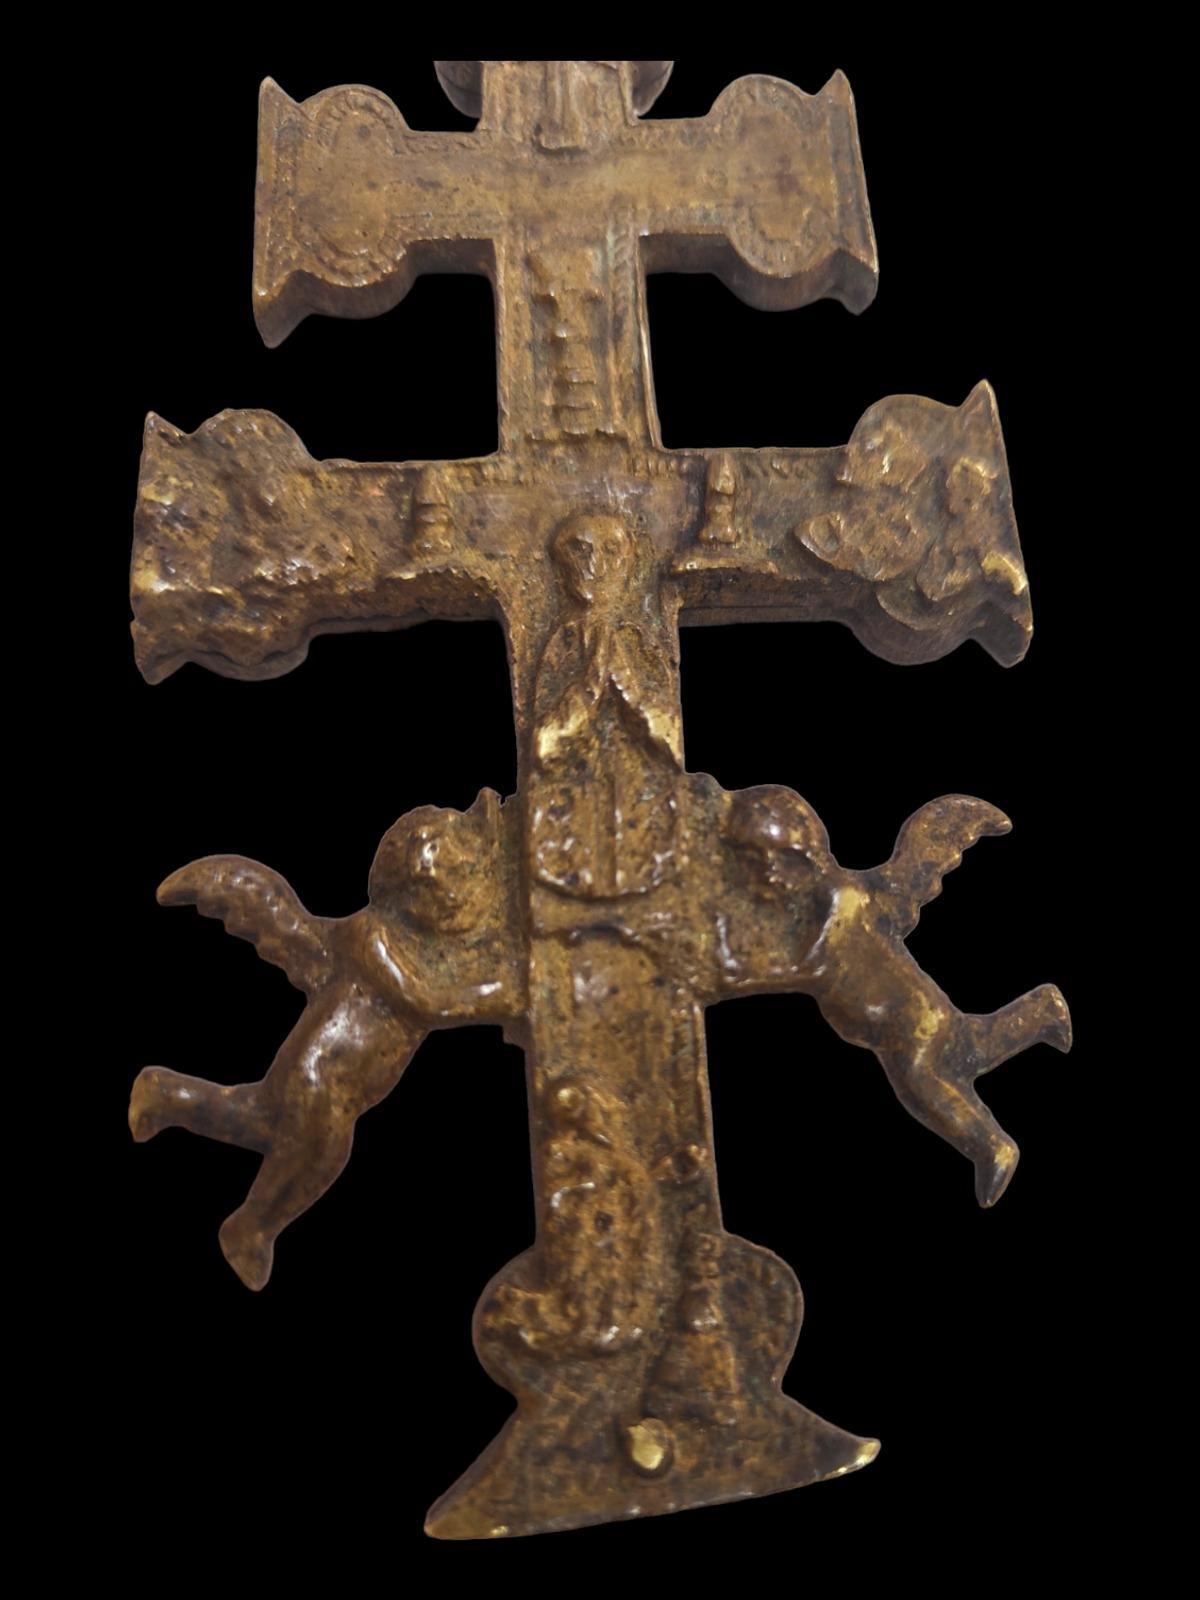 Cross of caravaca XVII century.
Very beautiful cross of caravaca made in bronze. 17th Century. Measurements: 14X6 cm.
Good condition.